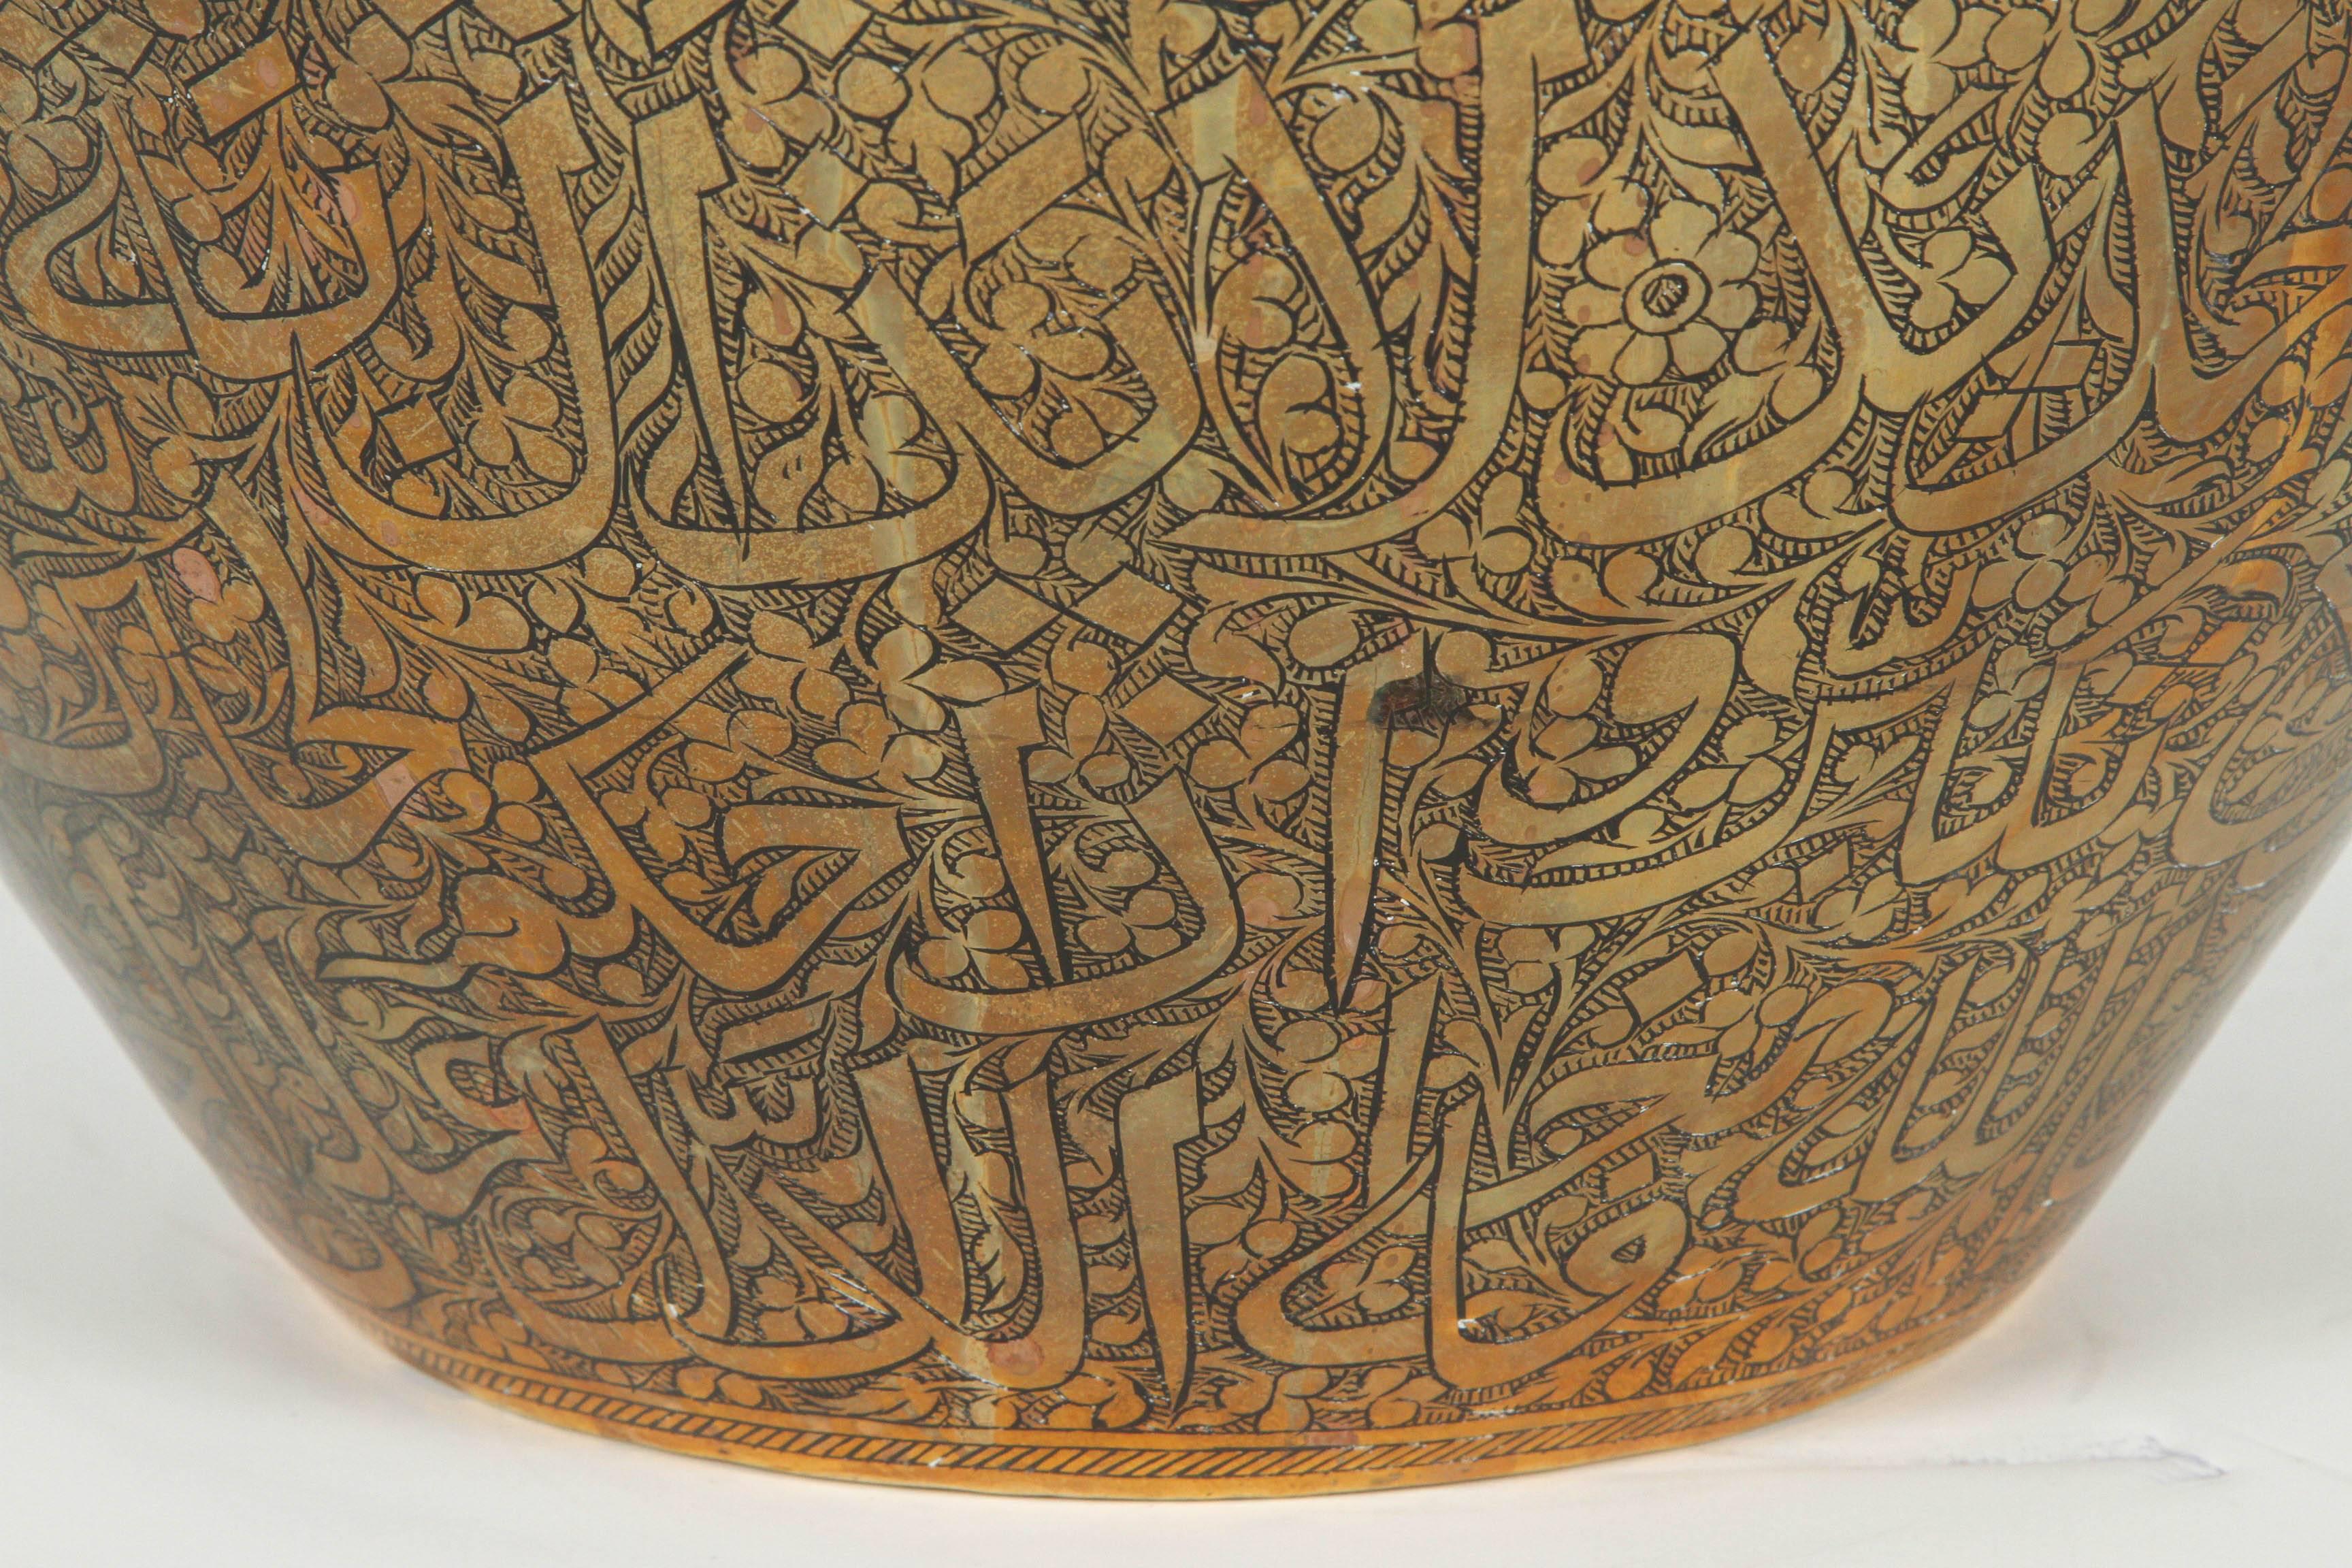 Turkish Arabic Calligraphy Writing on Large Brass Pot